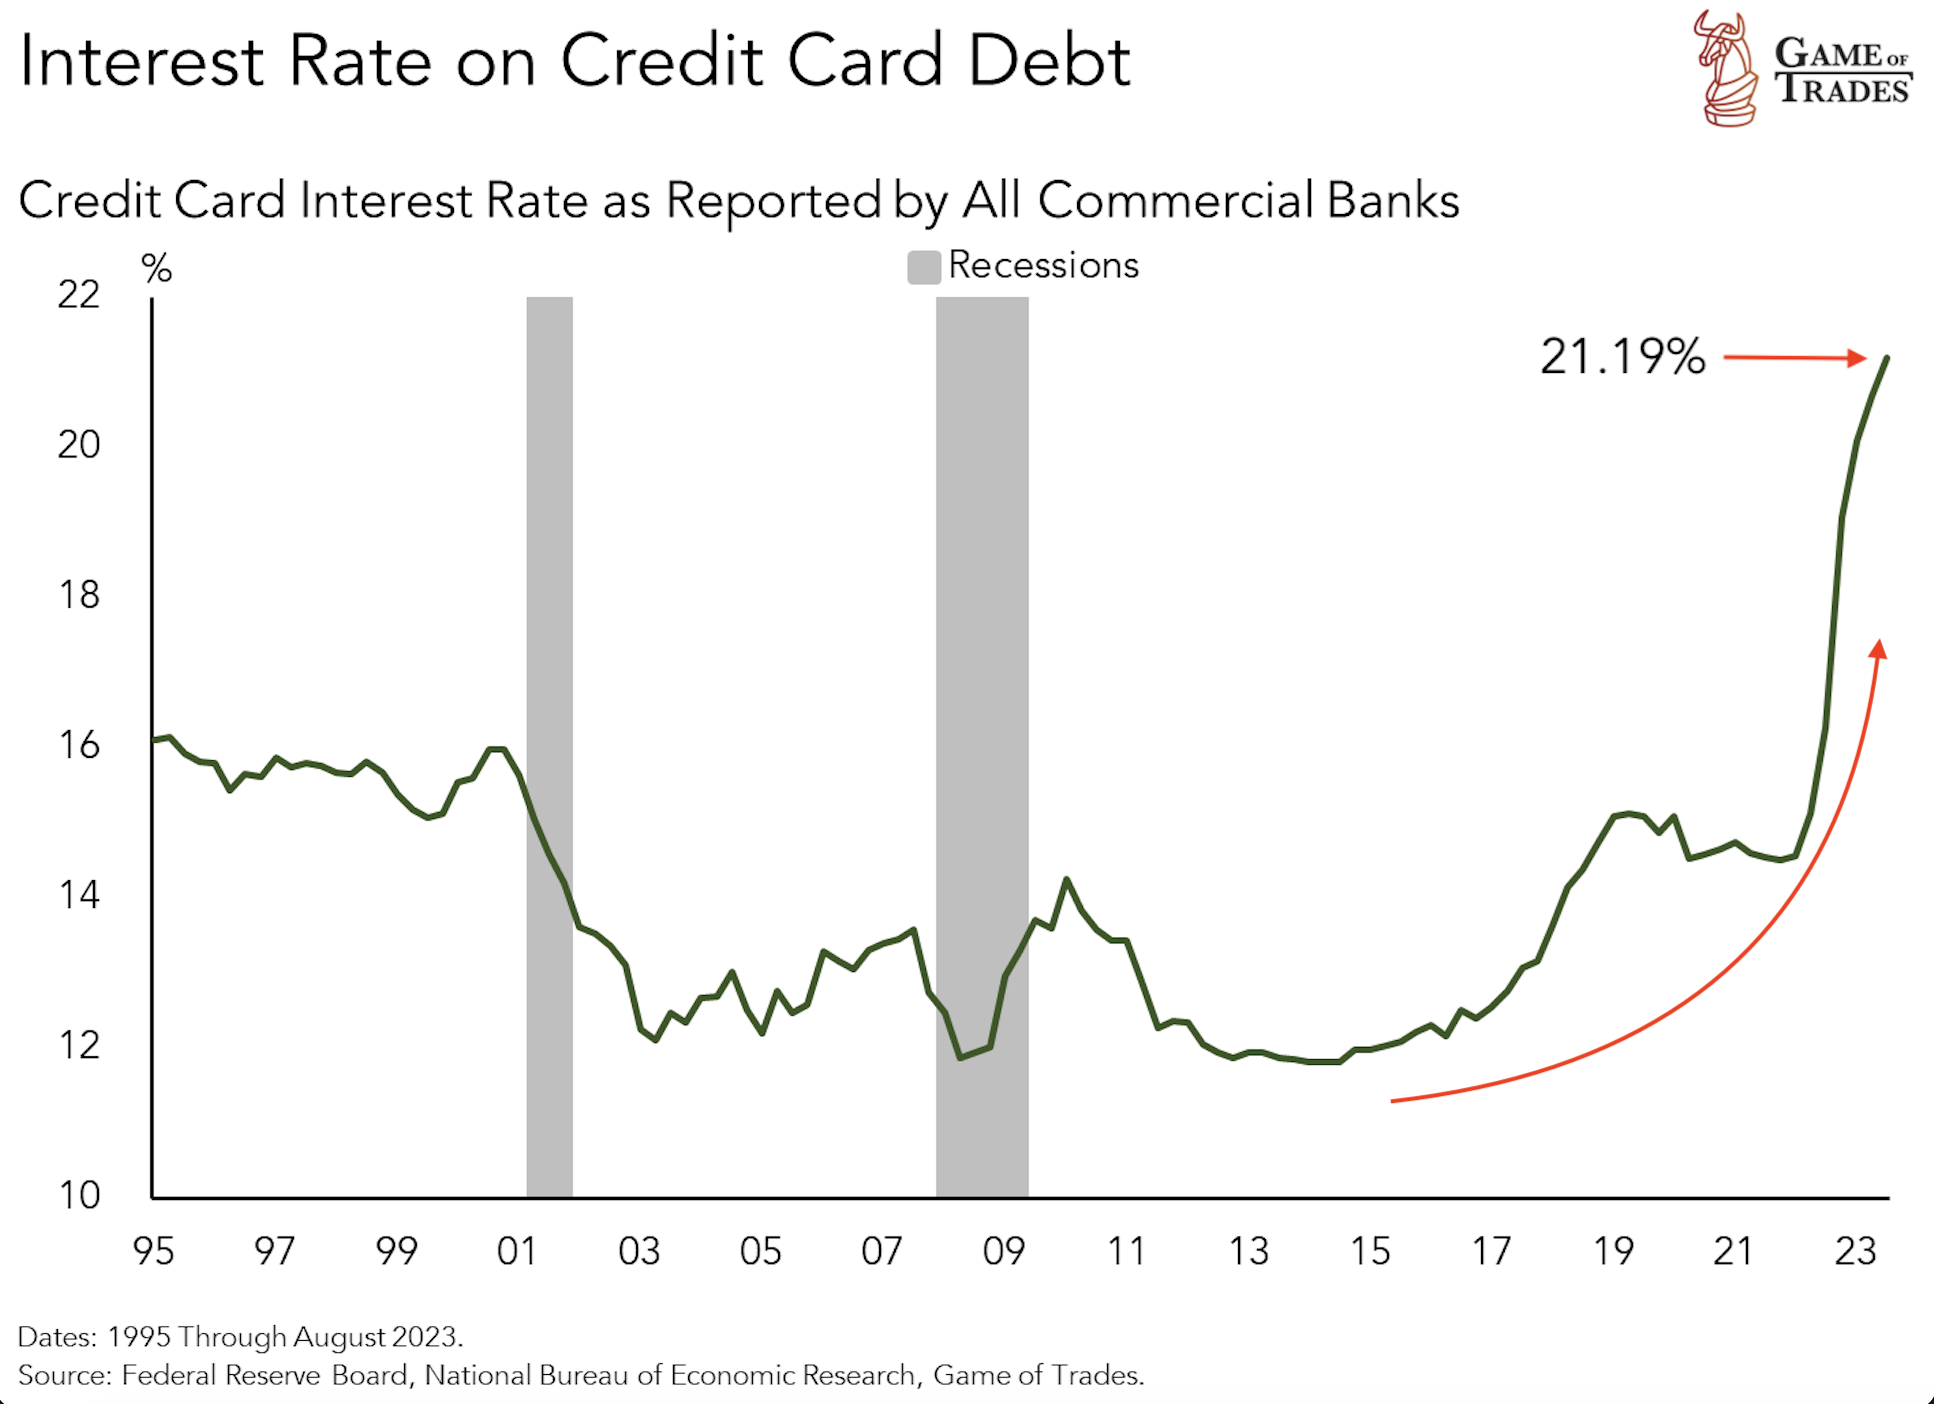 Interest rate on credit card debt